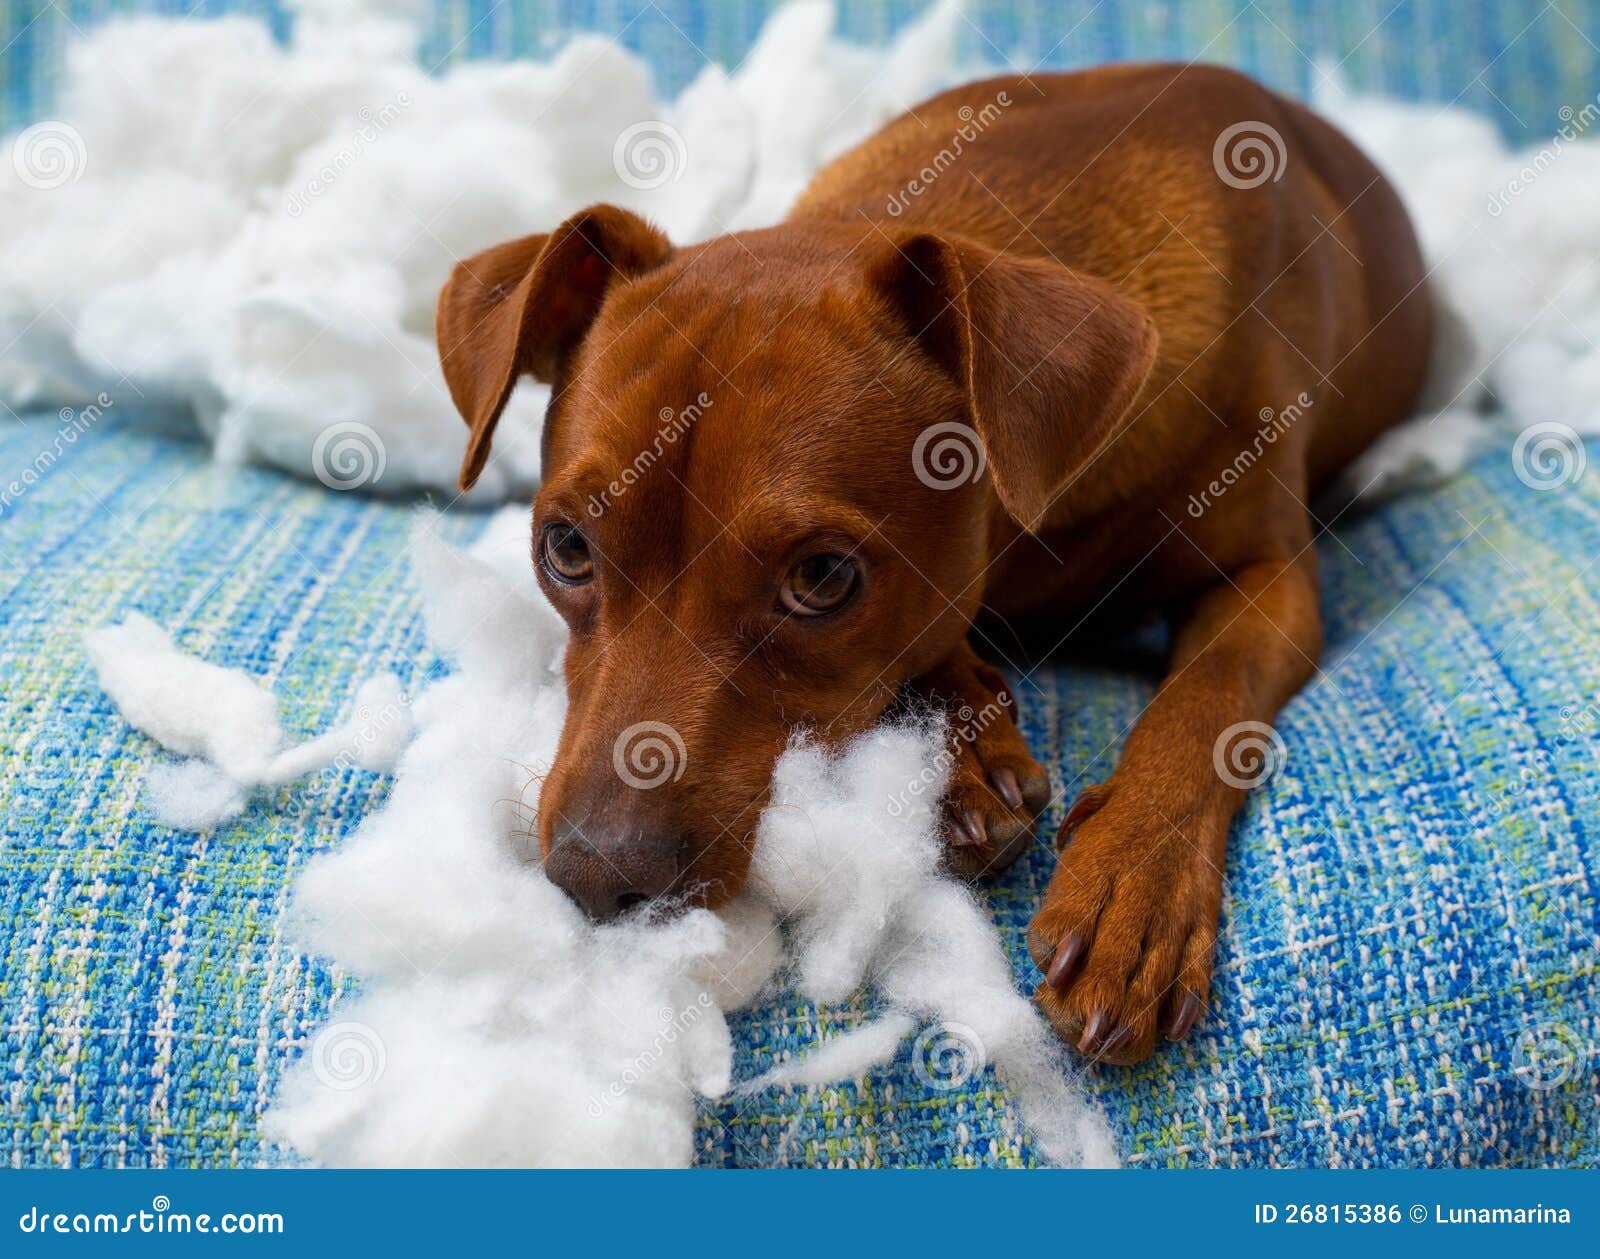 naughty playful puppy dog after biting a pillow